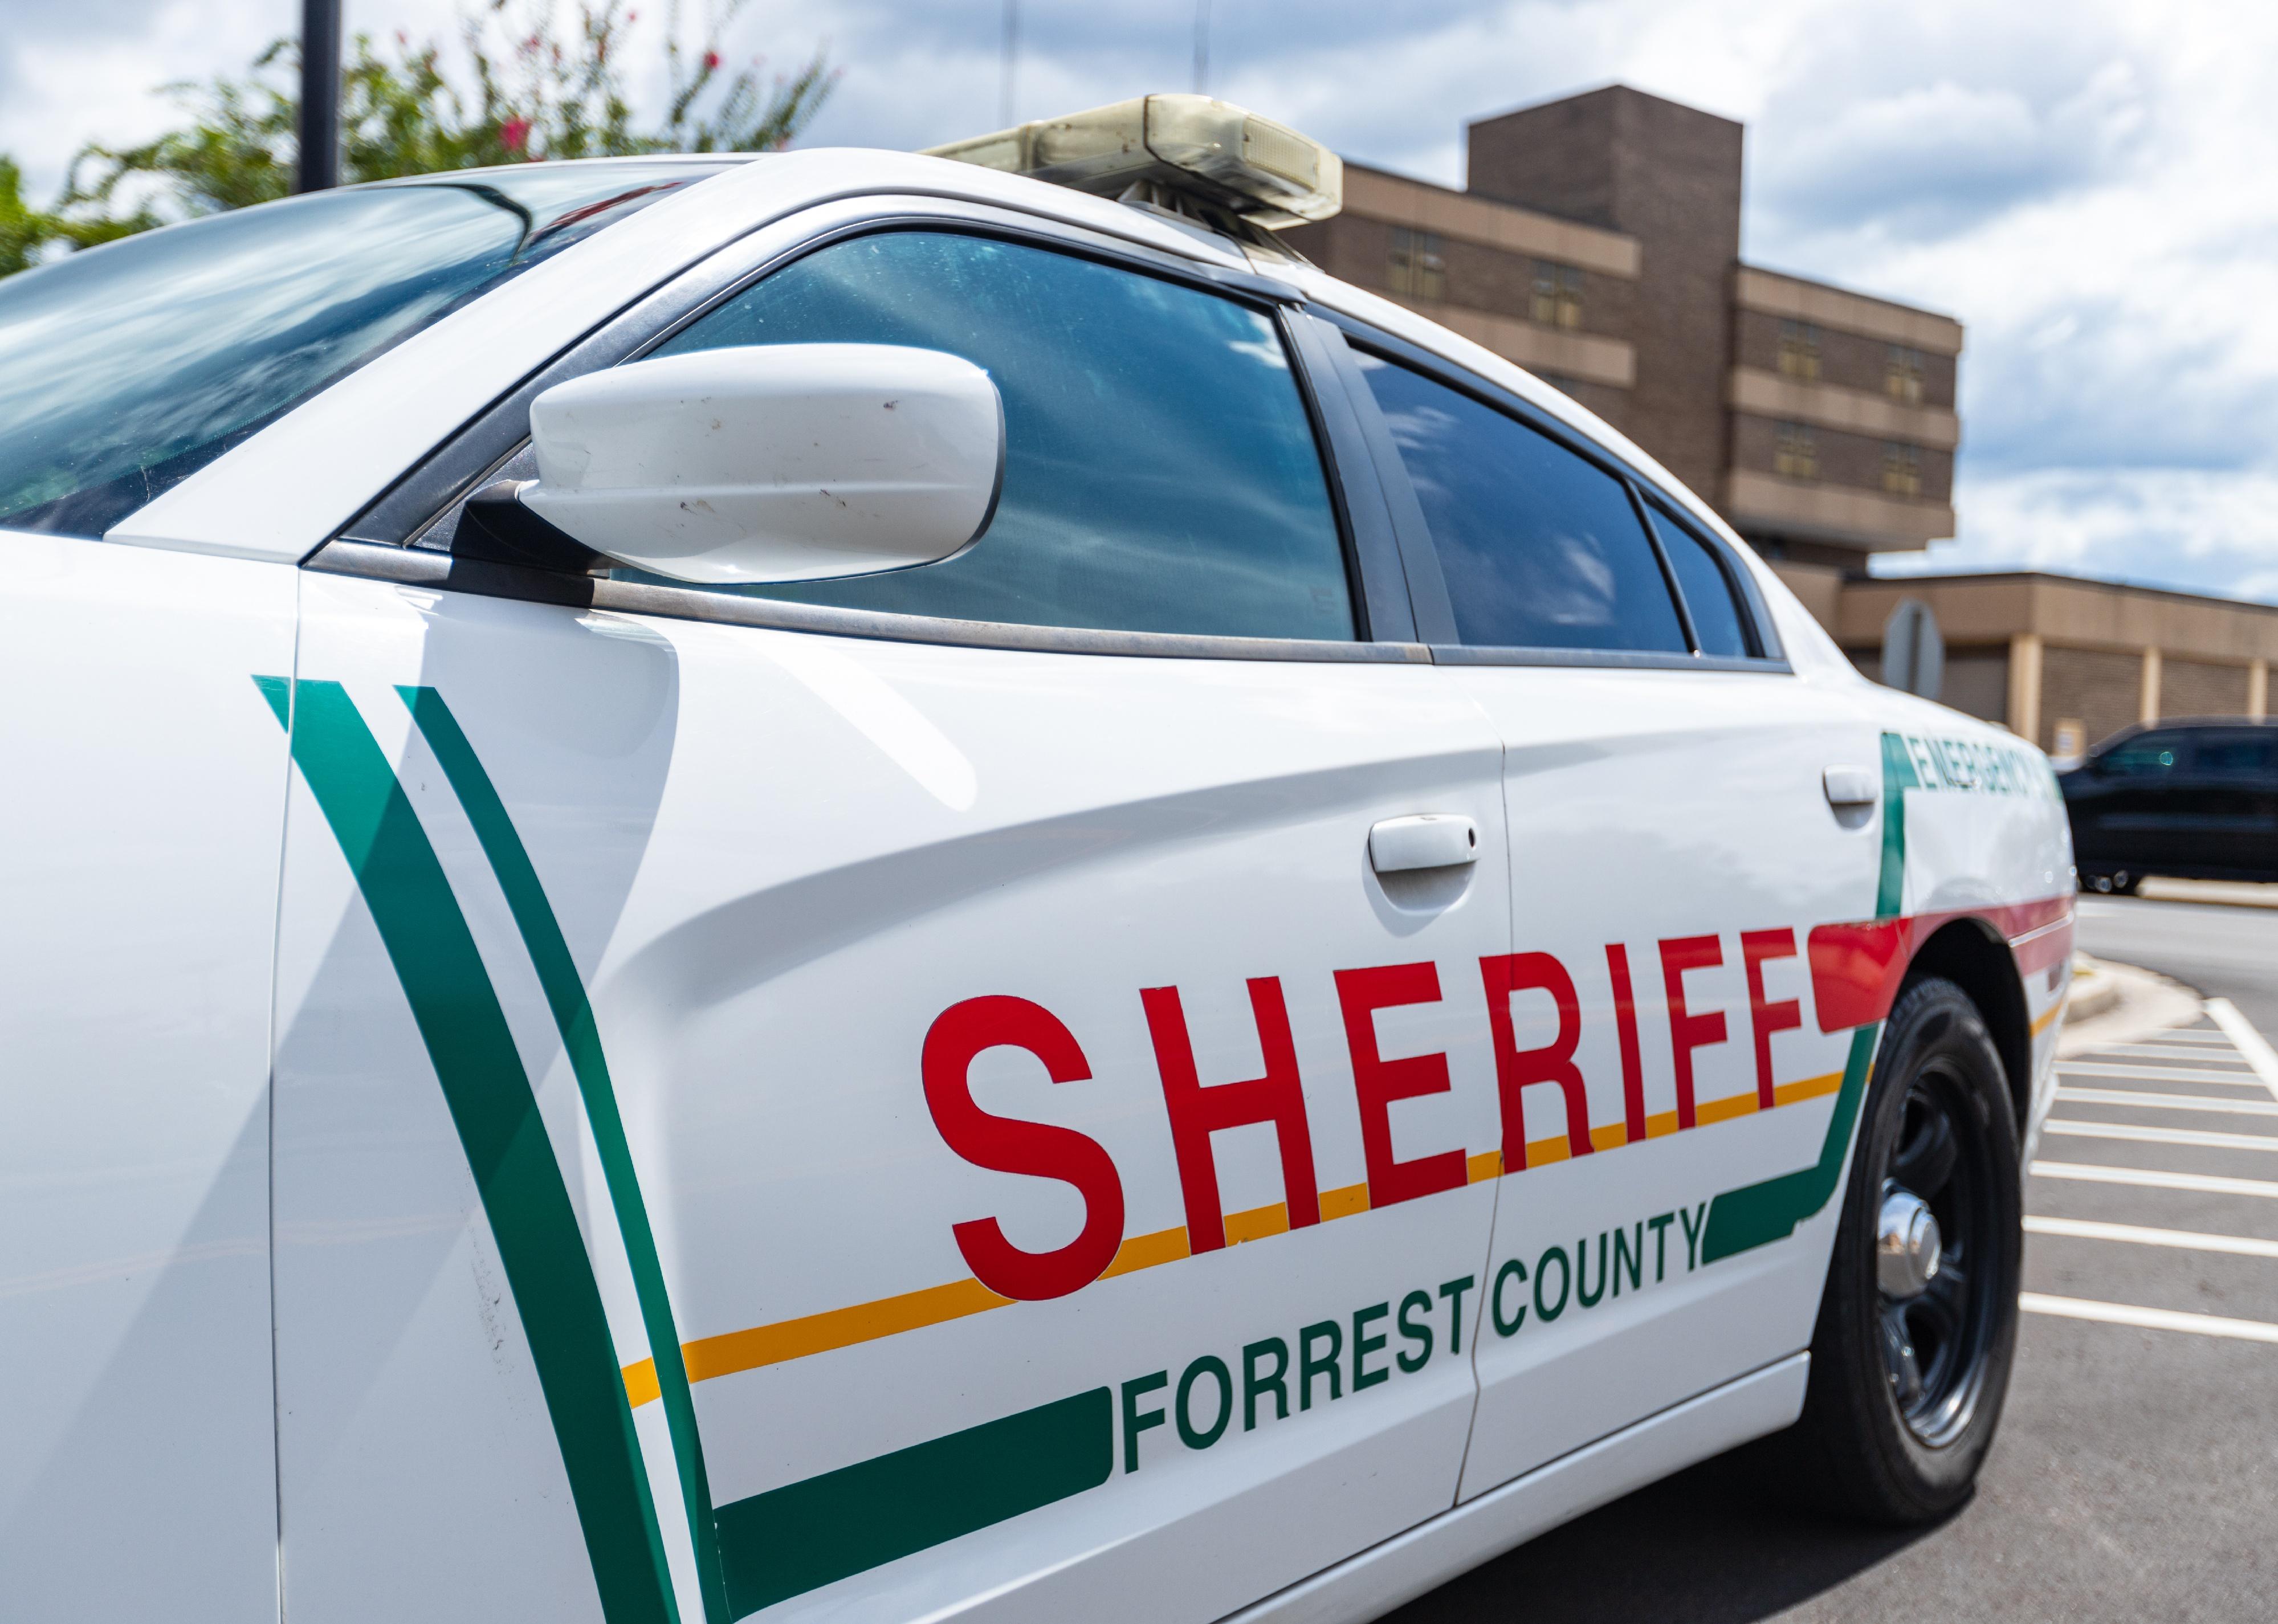 Forrest County Mississippi sheriff patrol car.